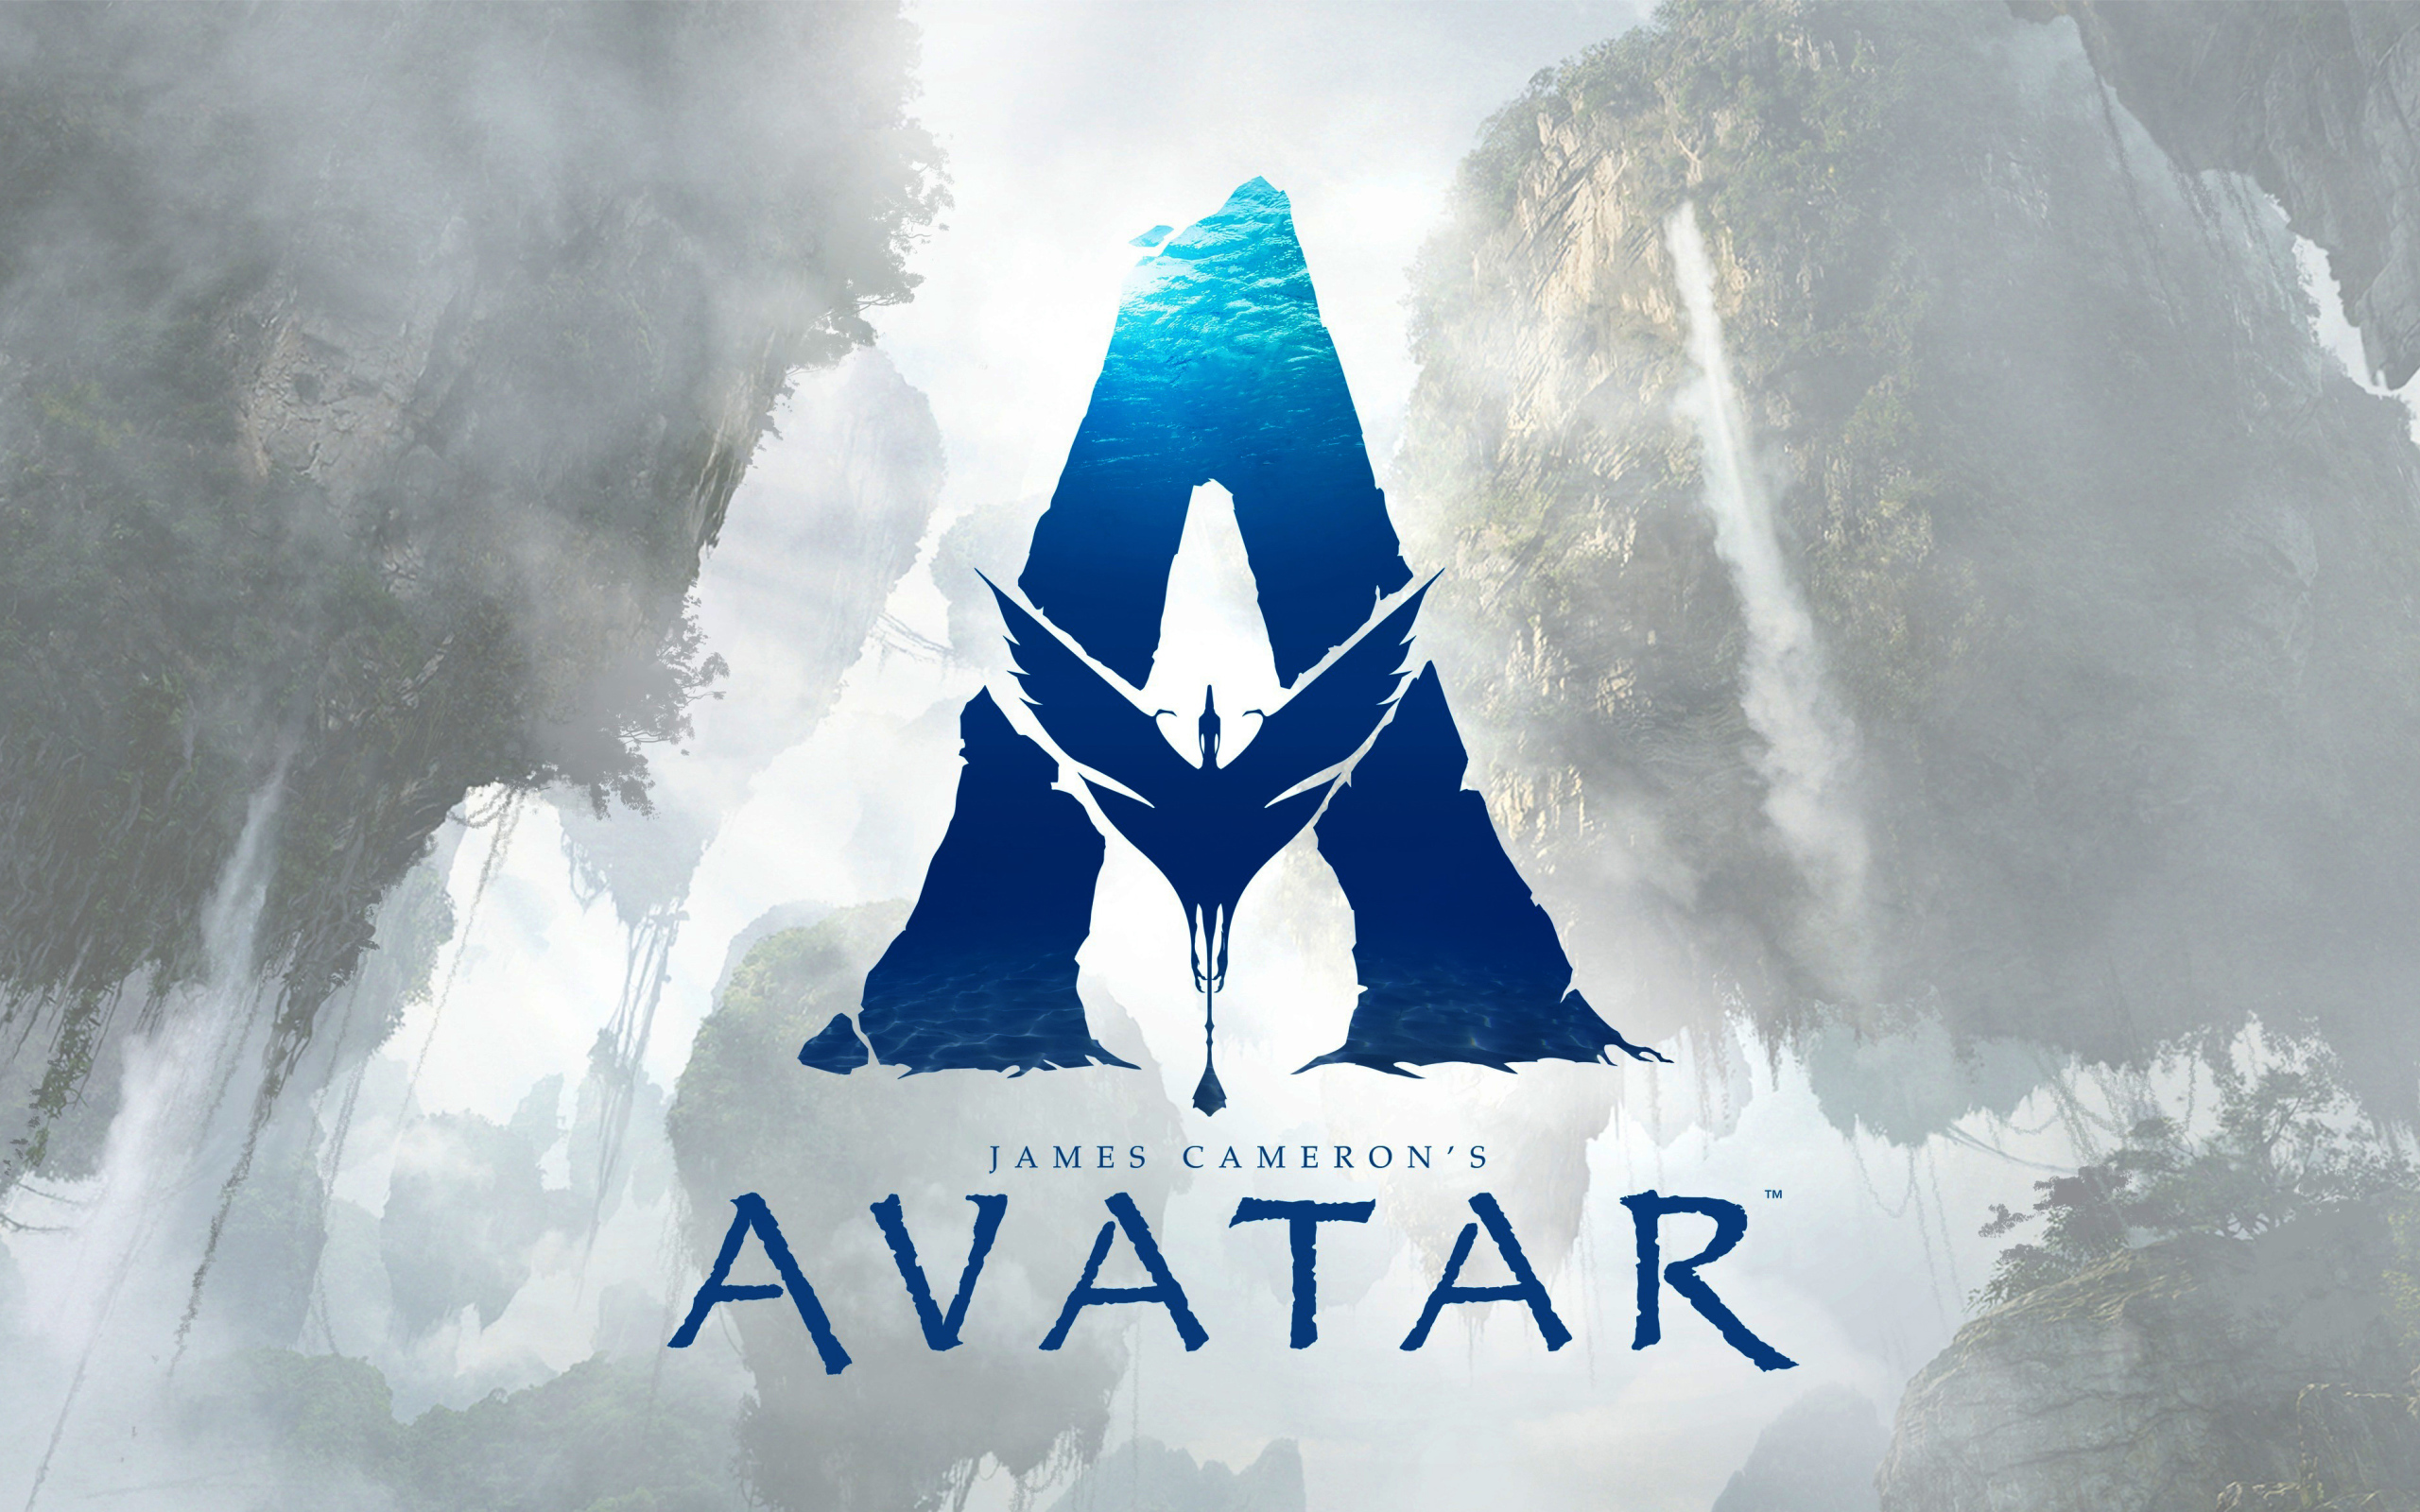 Logo of the film fantasy Avatar 2, 2020